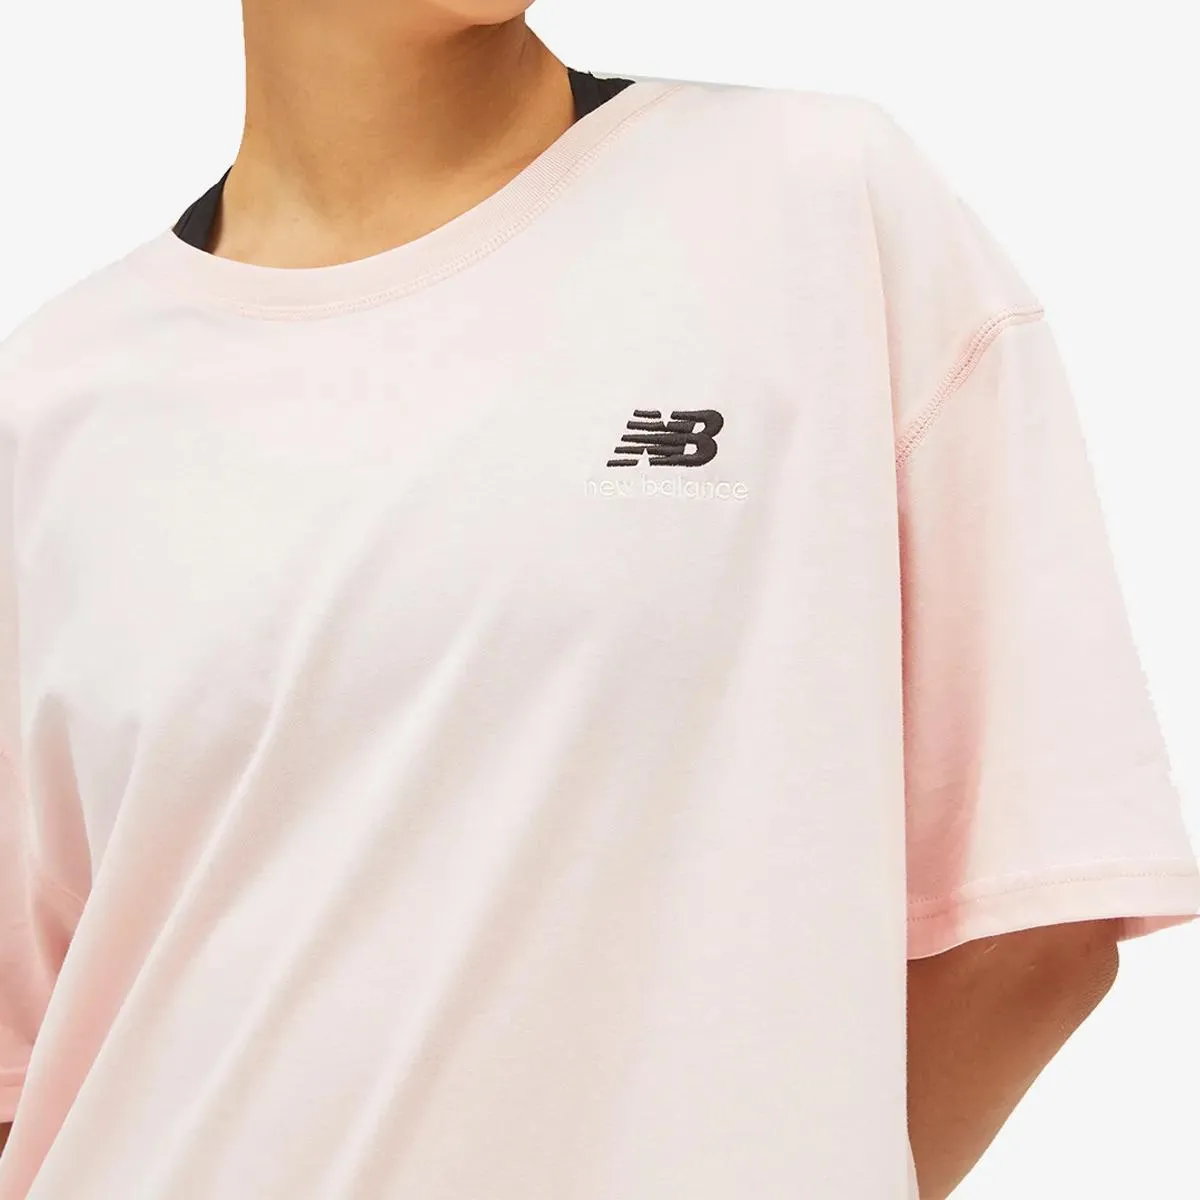 New Balance T-shirt NB Essentials uni-ssentials Tee 